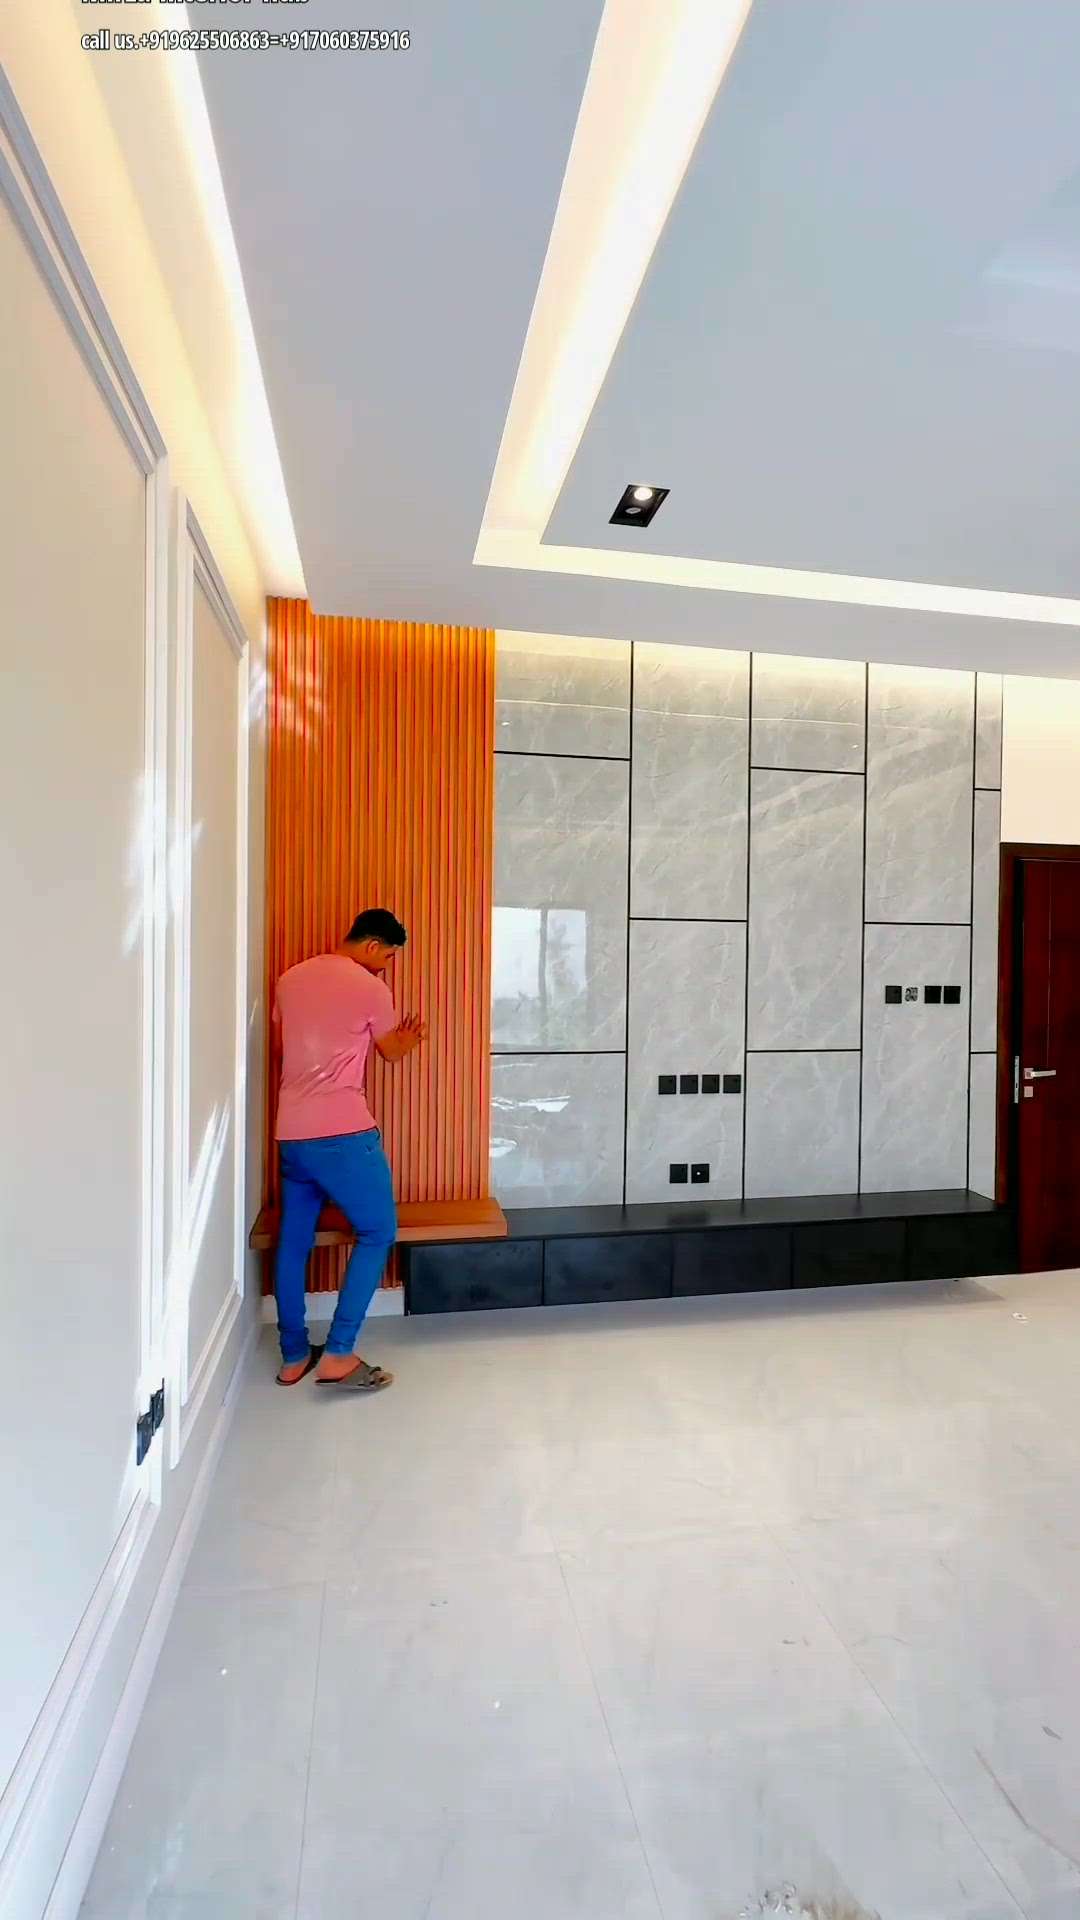 #lcdunitdesign  #LCDPenl  #TVStand  #LivingroomDesigns  #Modularfurniture work karane ke liye contact kare
whats.+919625506863
call.+917060375916 Sakib Mirza